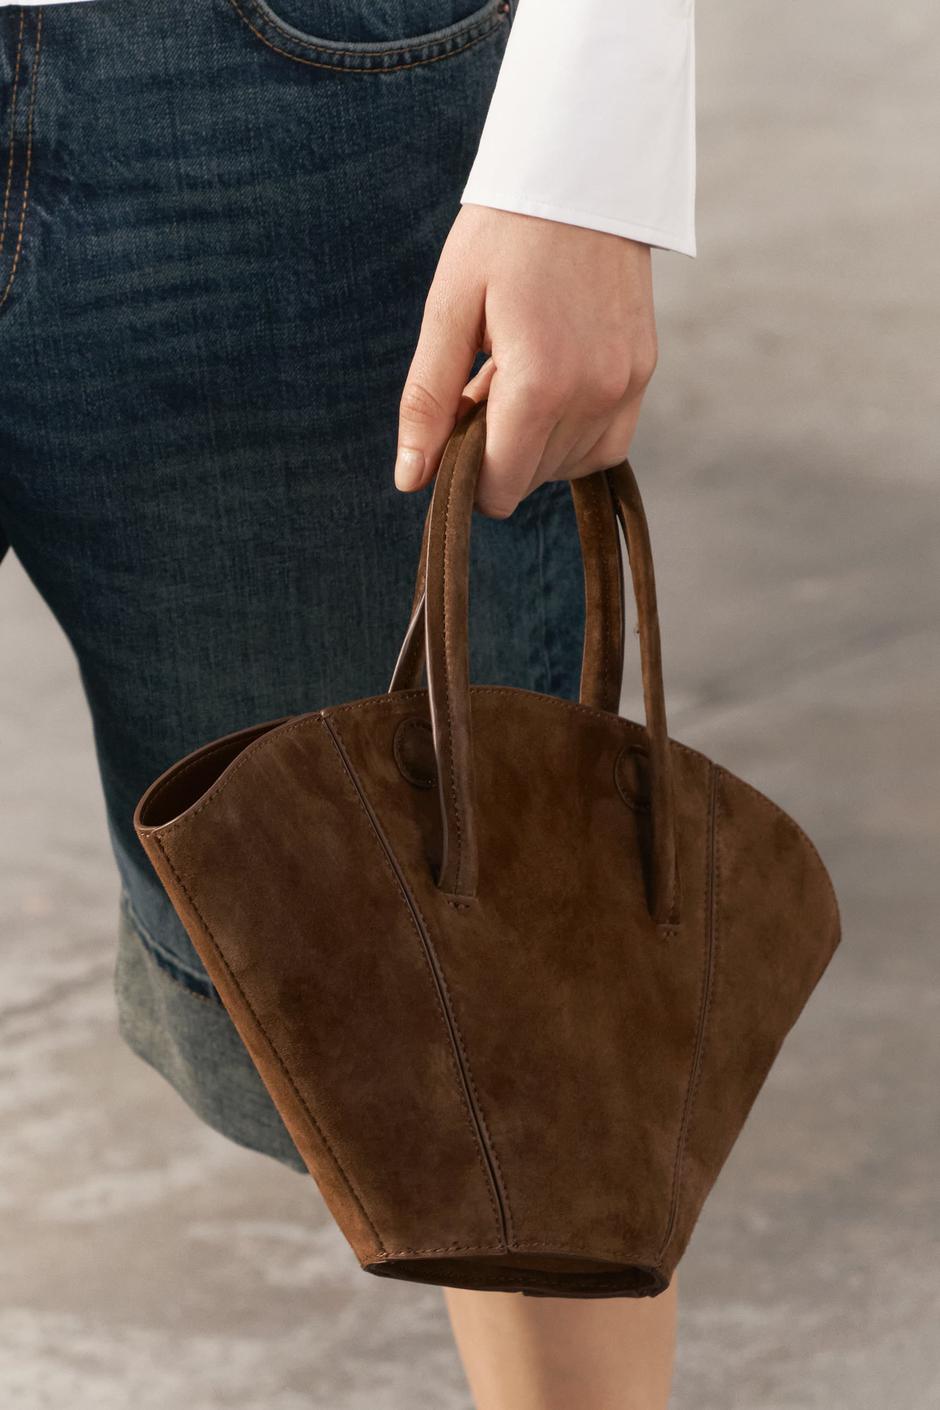 Foto: Zara, smeđa torba od brušene kože | Autor: zara